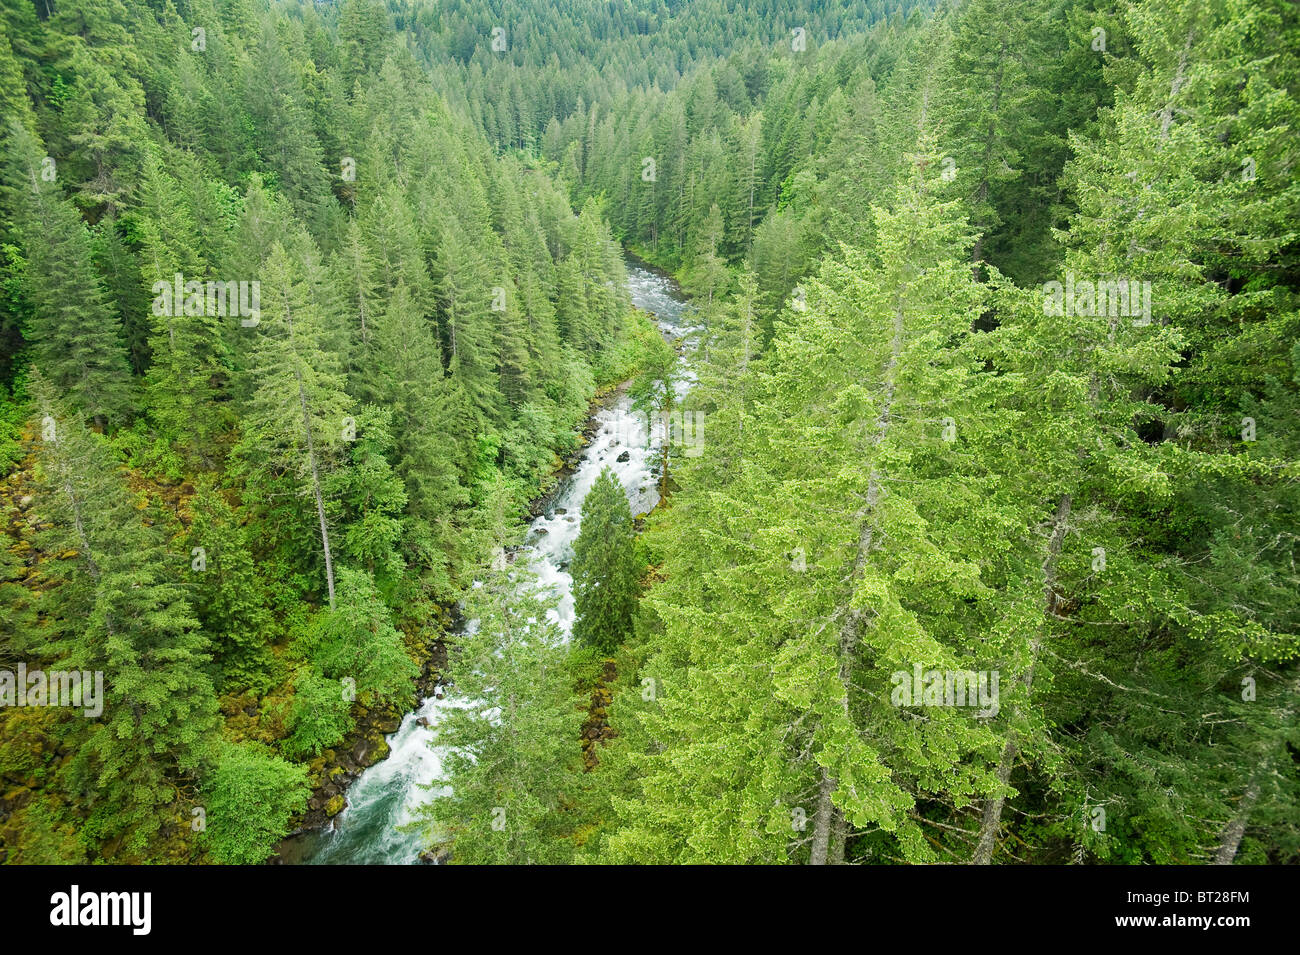 Immergrünen Wald, Wind River Gorge, Gifford Pinchot National Forest, Washington USA Stockfoto